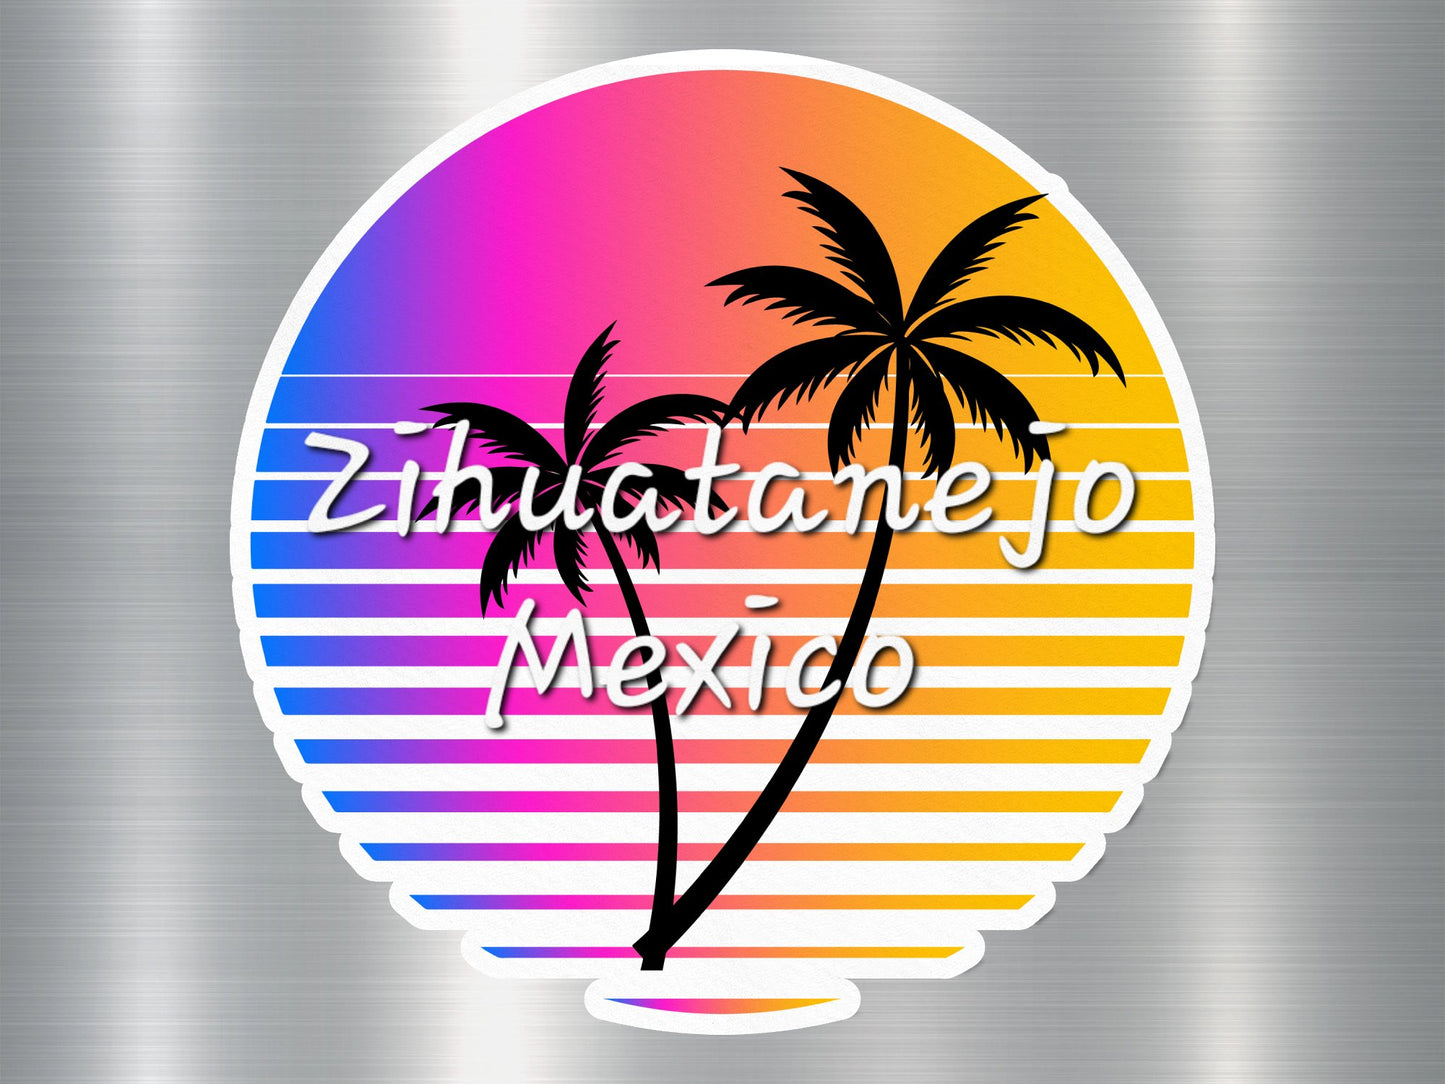 Zihuatanejo Mexico Sticker